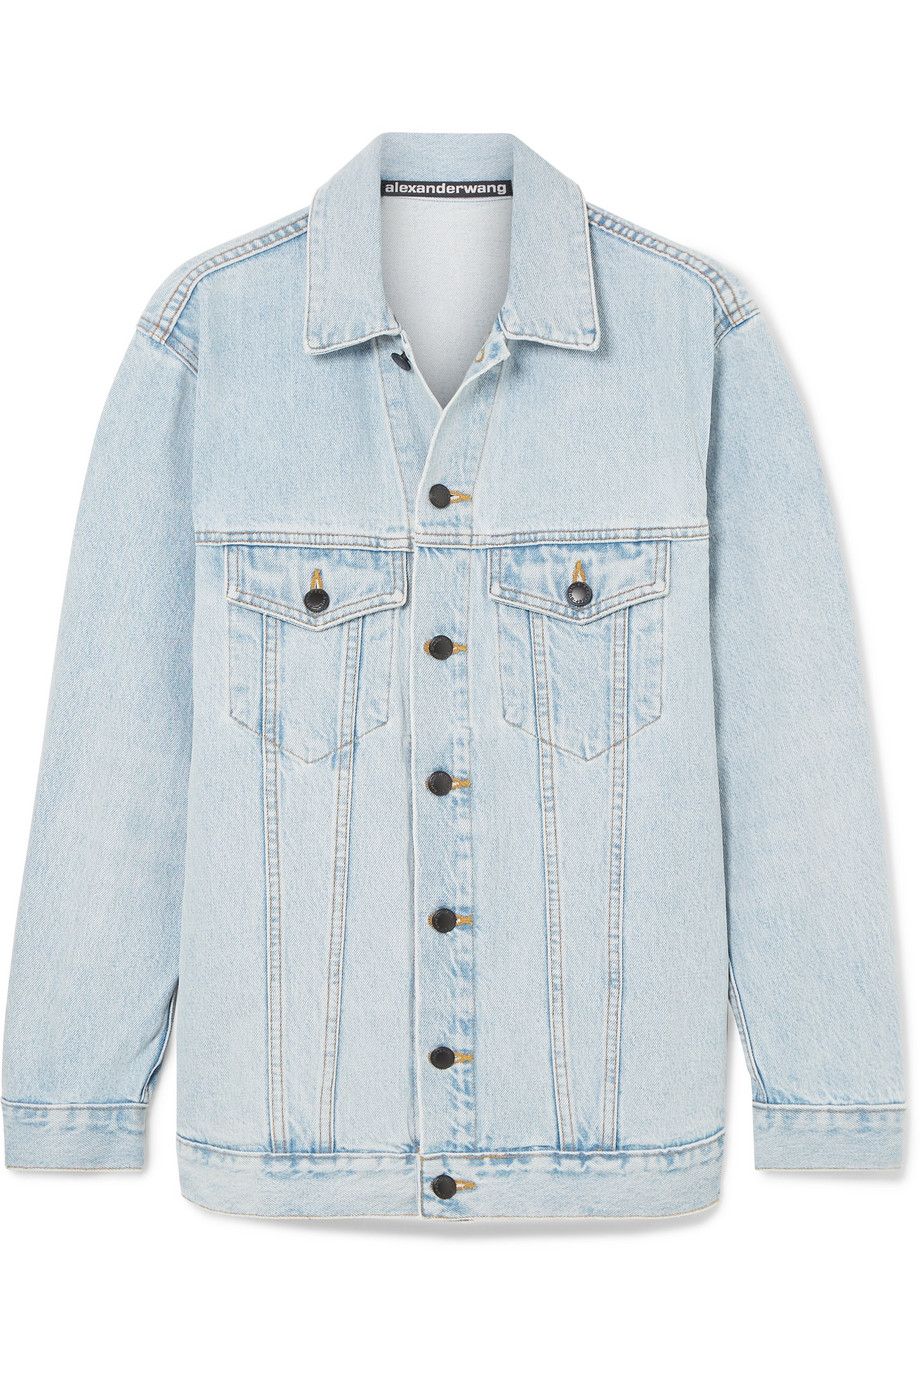 Best Oversized Denim Jackets for 2022 - Cool Oversized Jean 